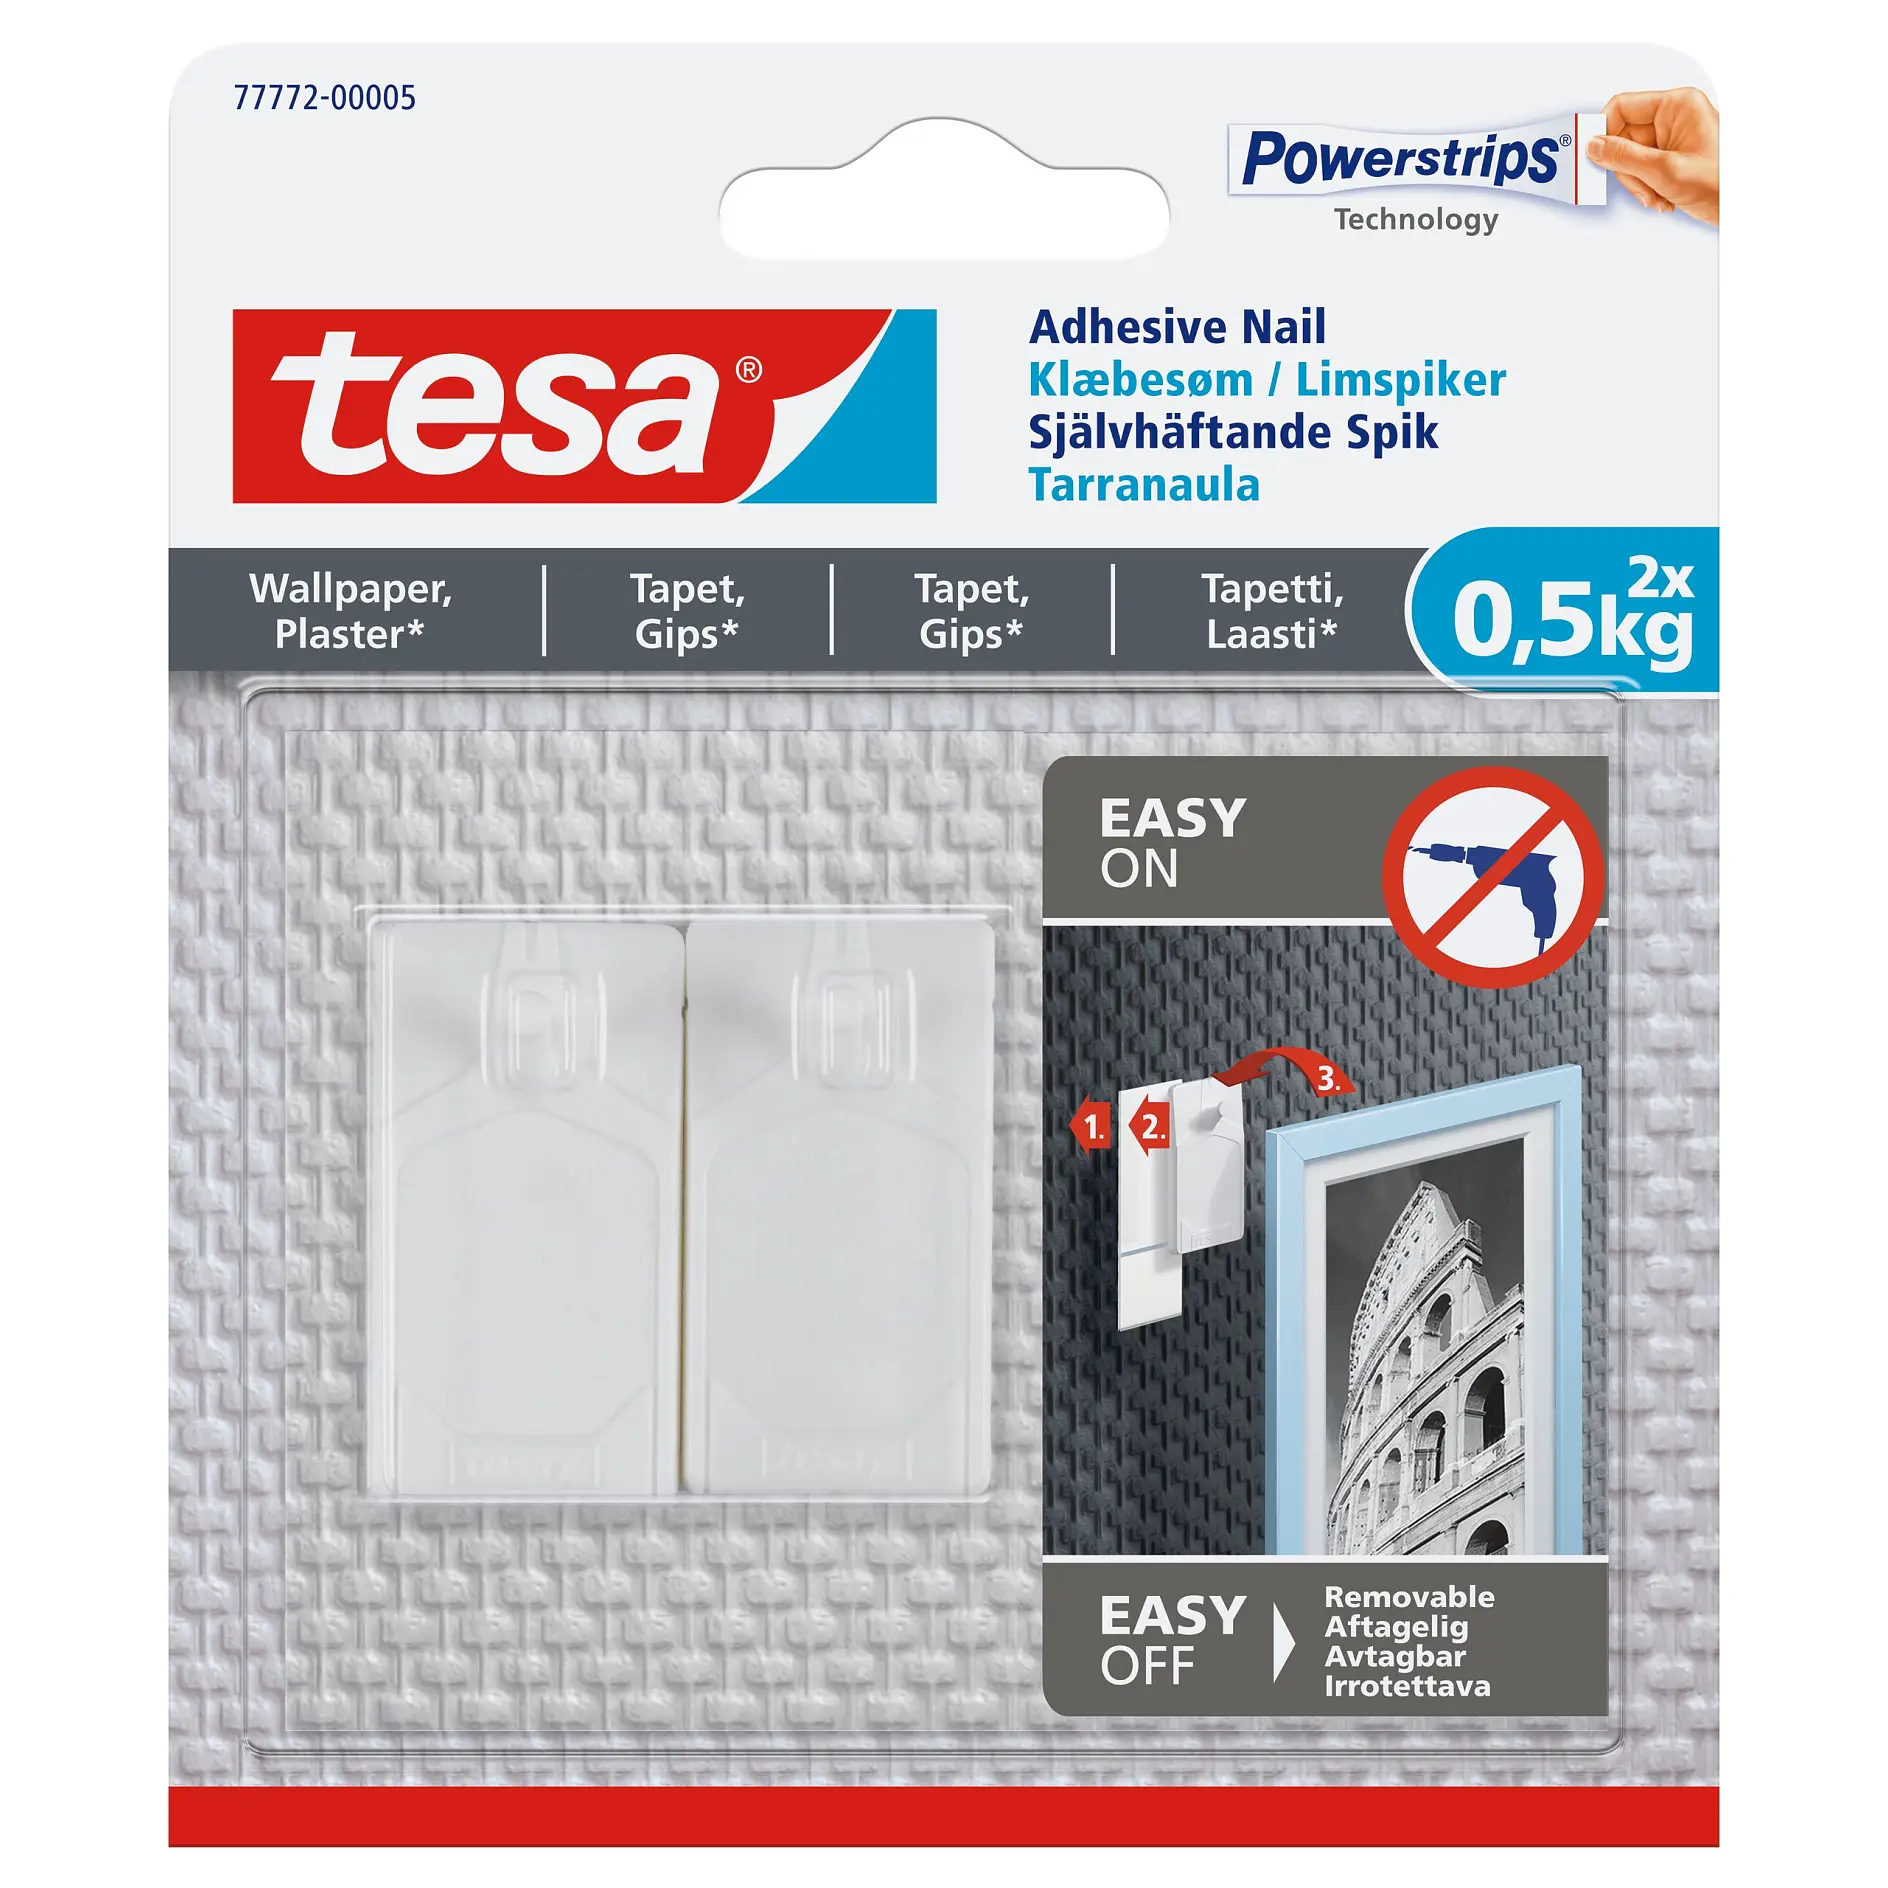 [en-en] tesa Smart Mounting system, adhesive nail for wallpaper, 2 x 1kg